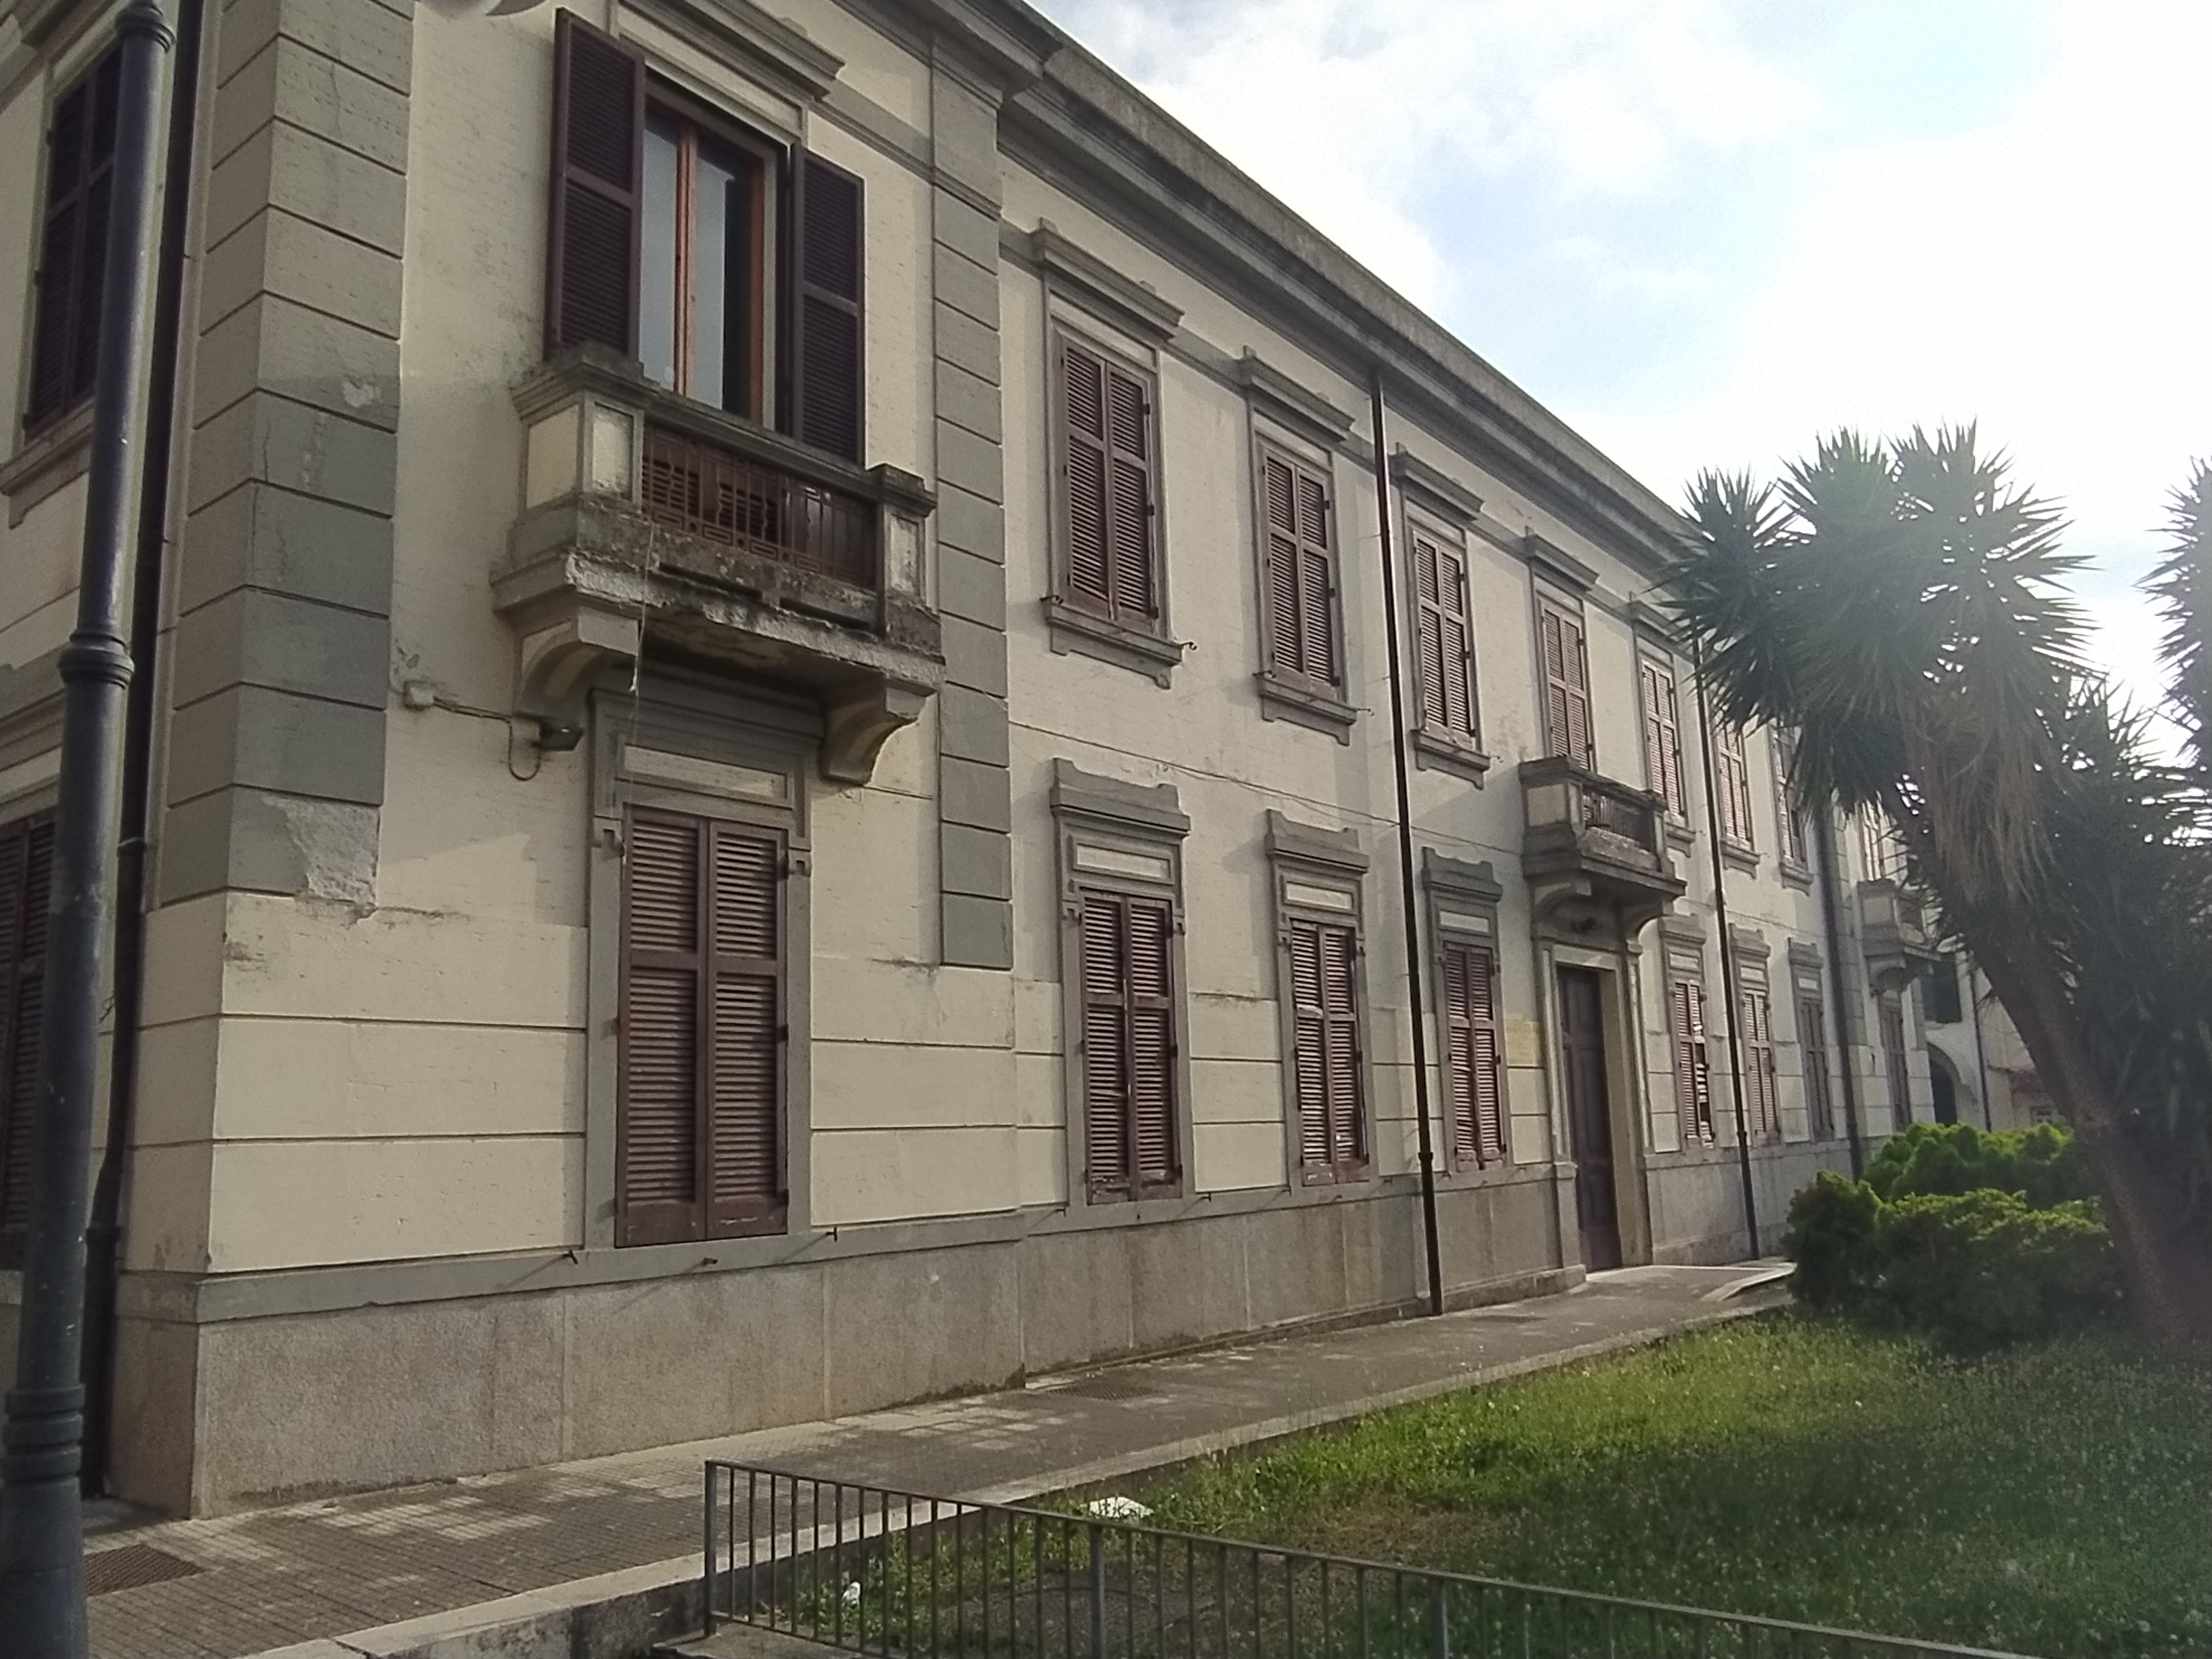 Palazzo degli Uffici (palazzo, per uffici) - Taurianova (RC)  (XX)